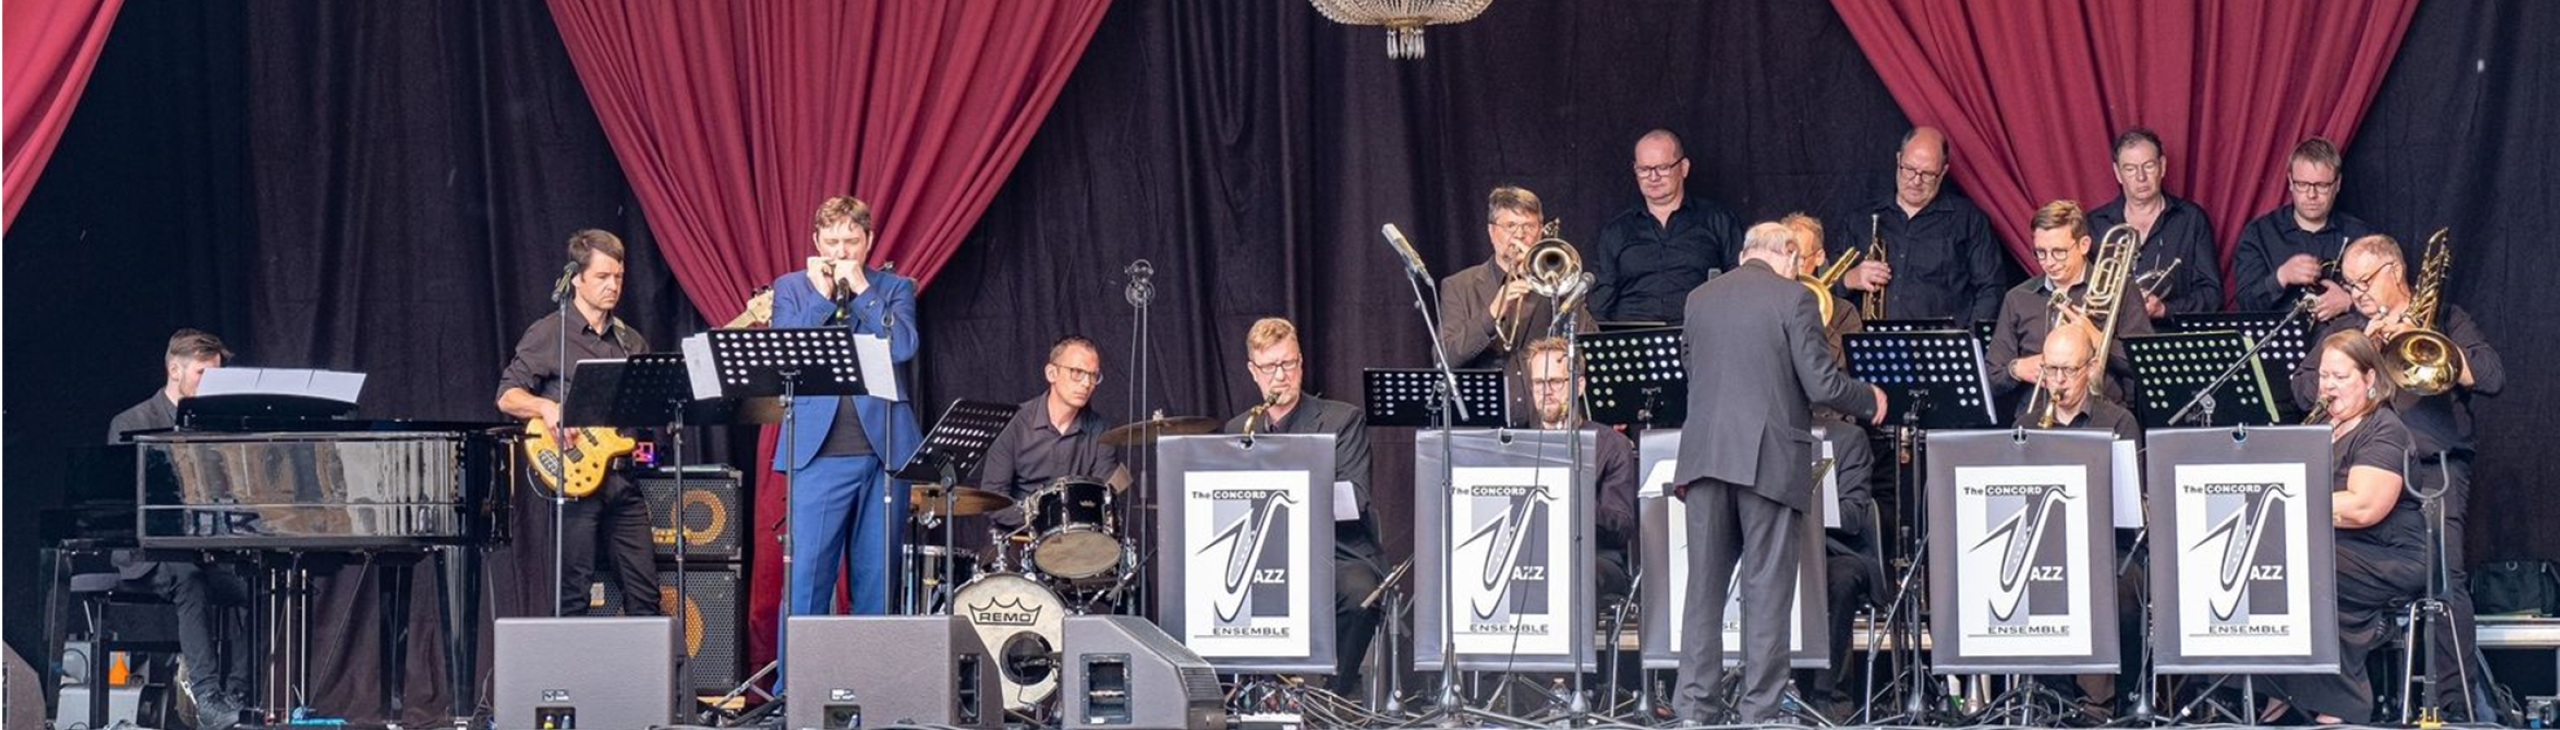 The concord jazz ensemble